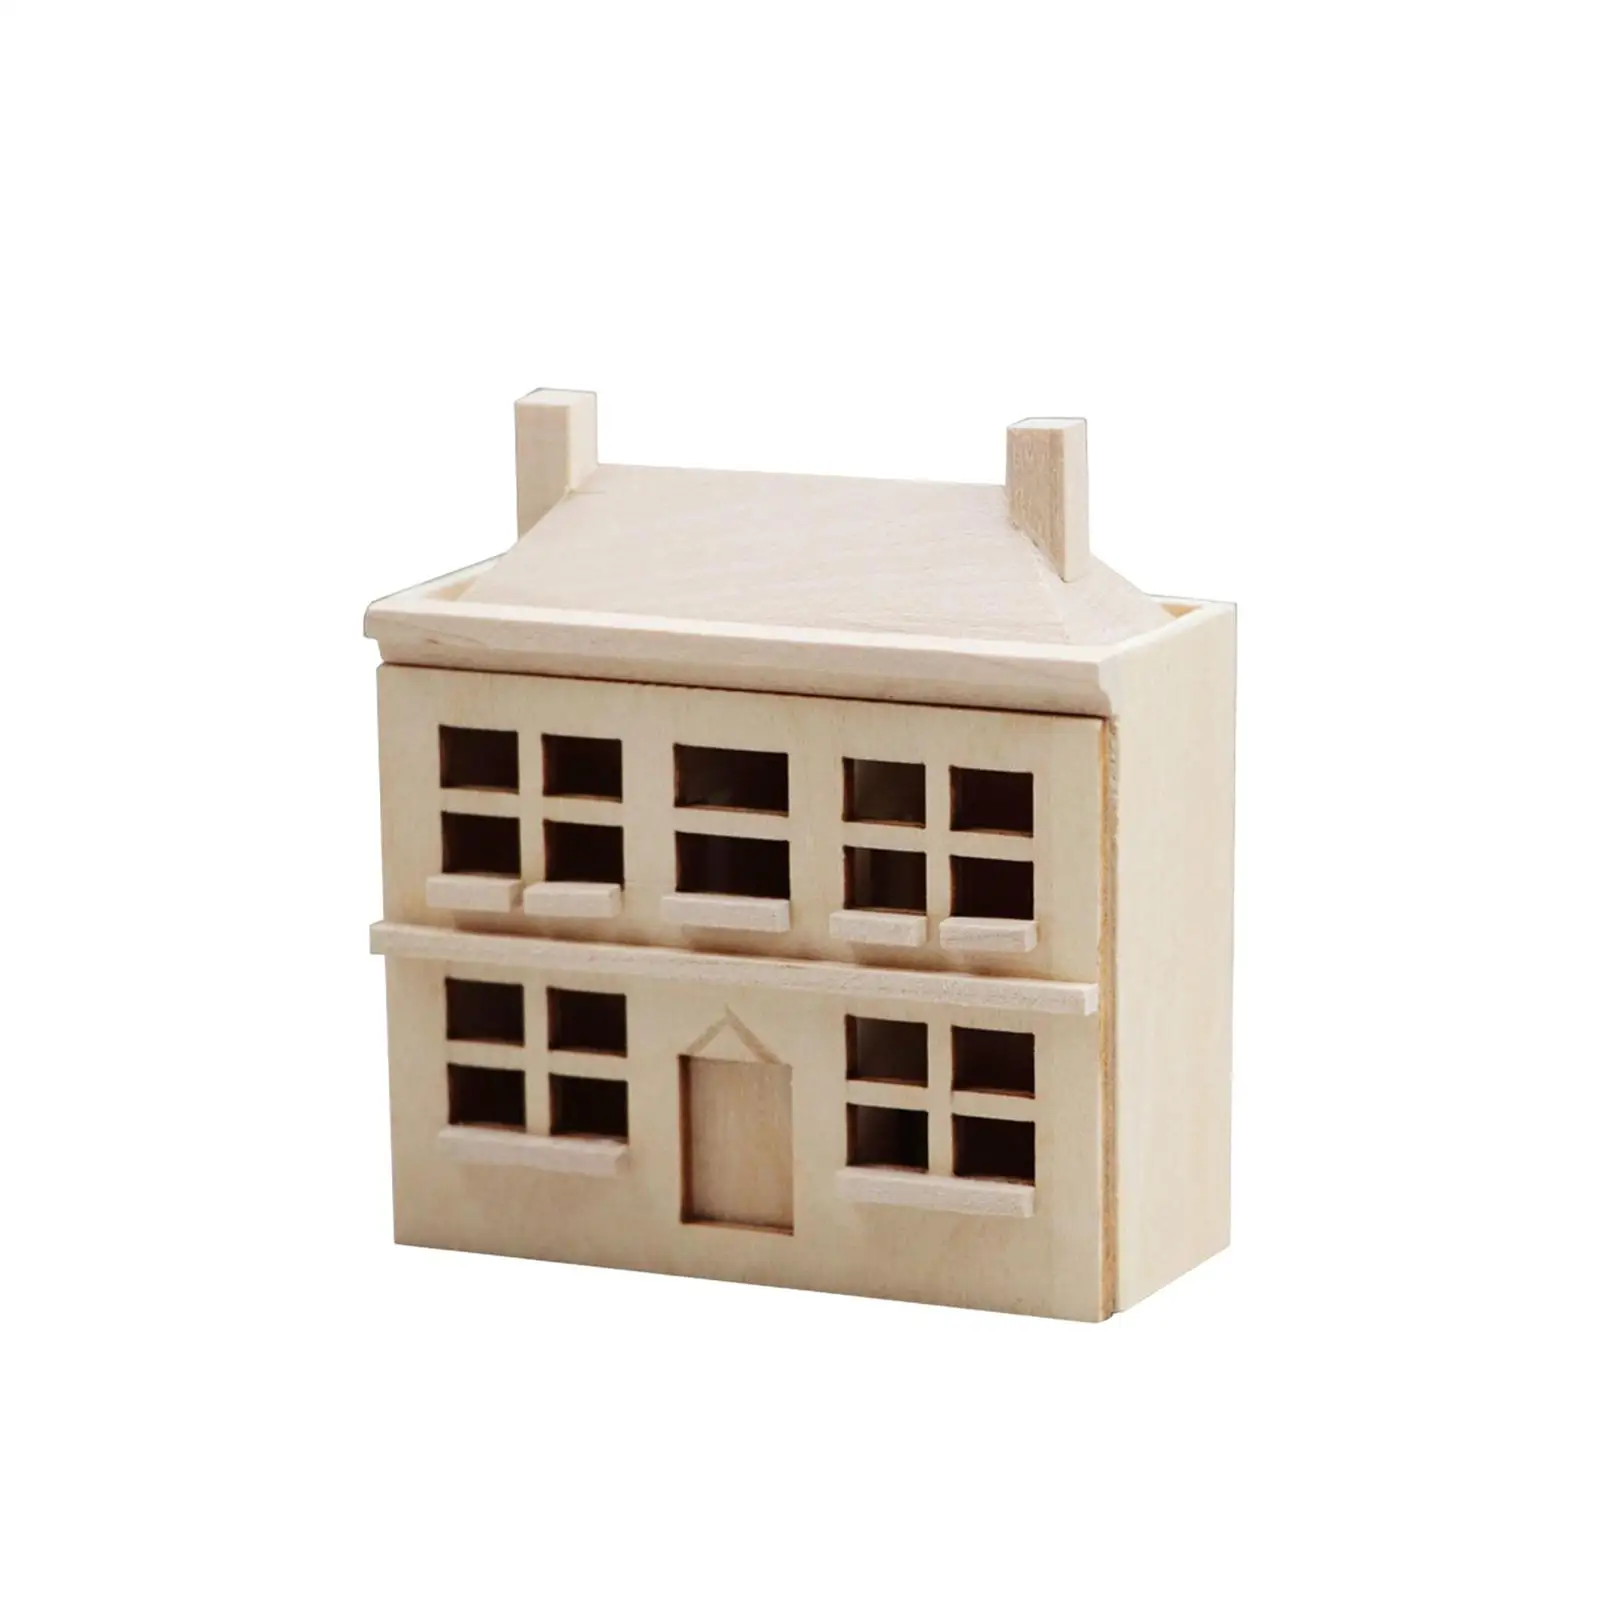 1:12 Dollhouse Villa House Handmade Model Miniature for Ornament